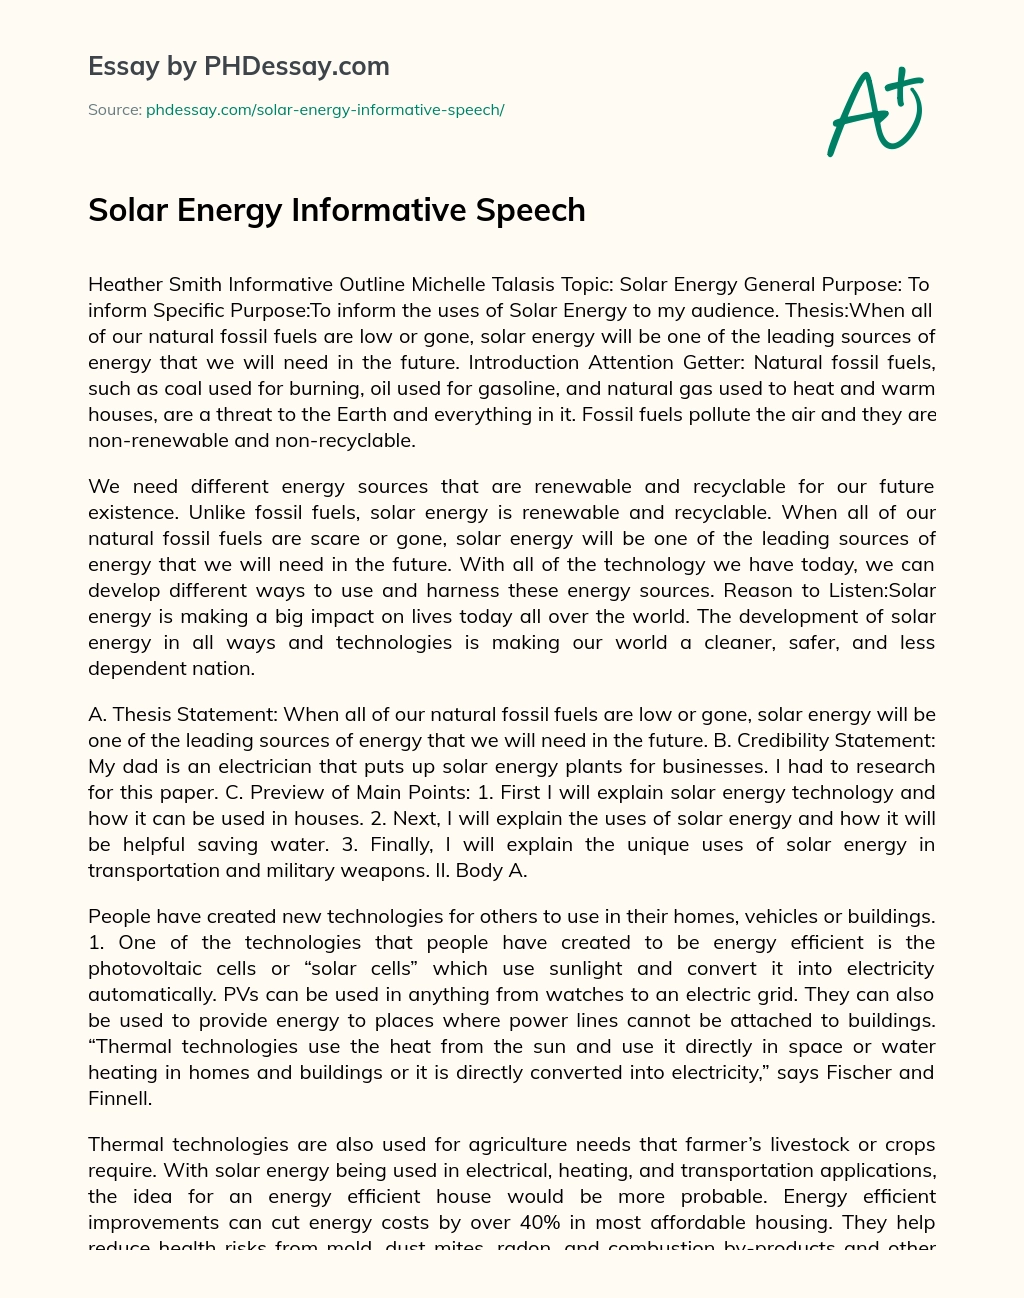 Solar Energy Informative Speech essay